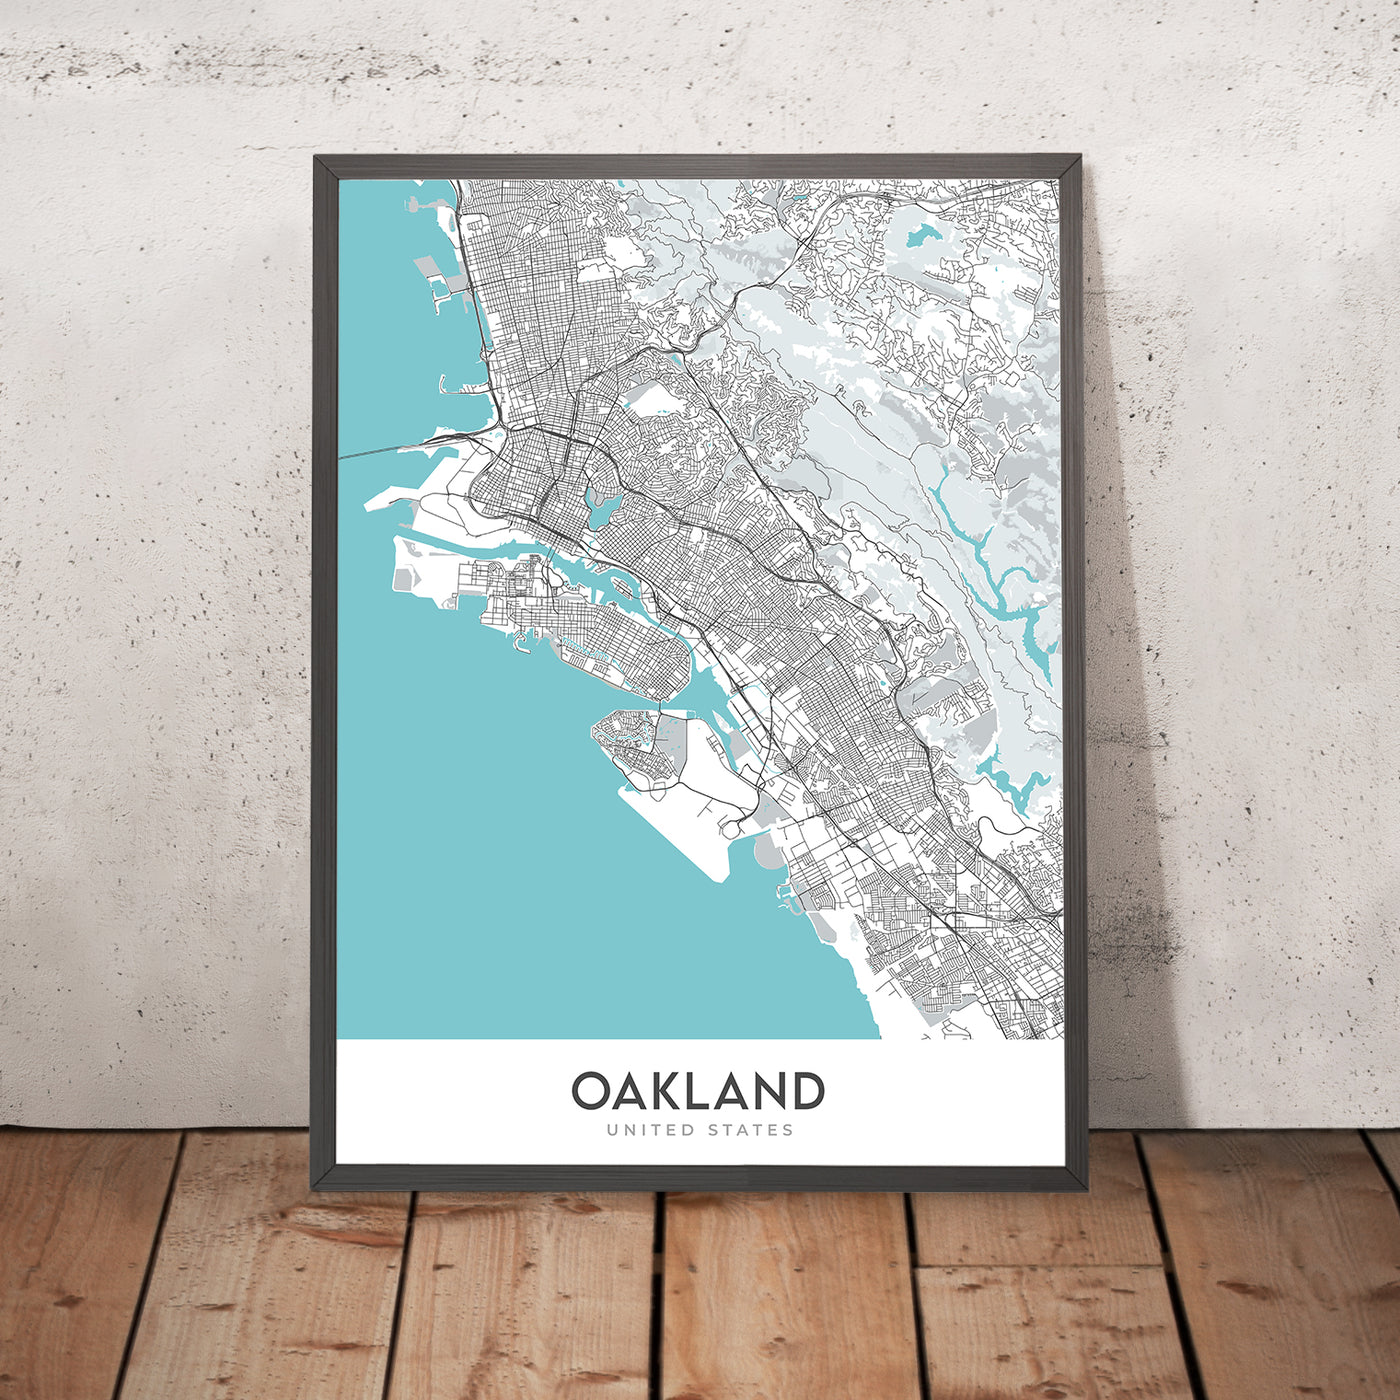 Modern City Map of Oakland, CA: Downtown, Jack London Sq, Chinatown, Lake Merritt, Fox Theater